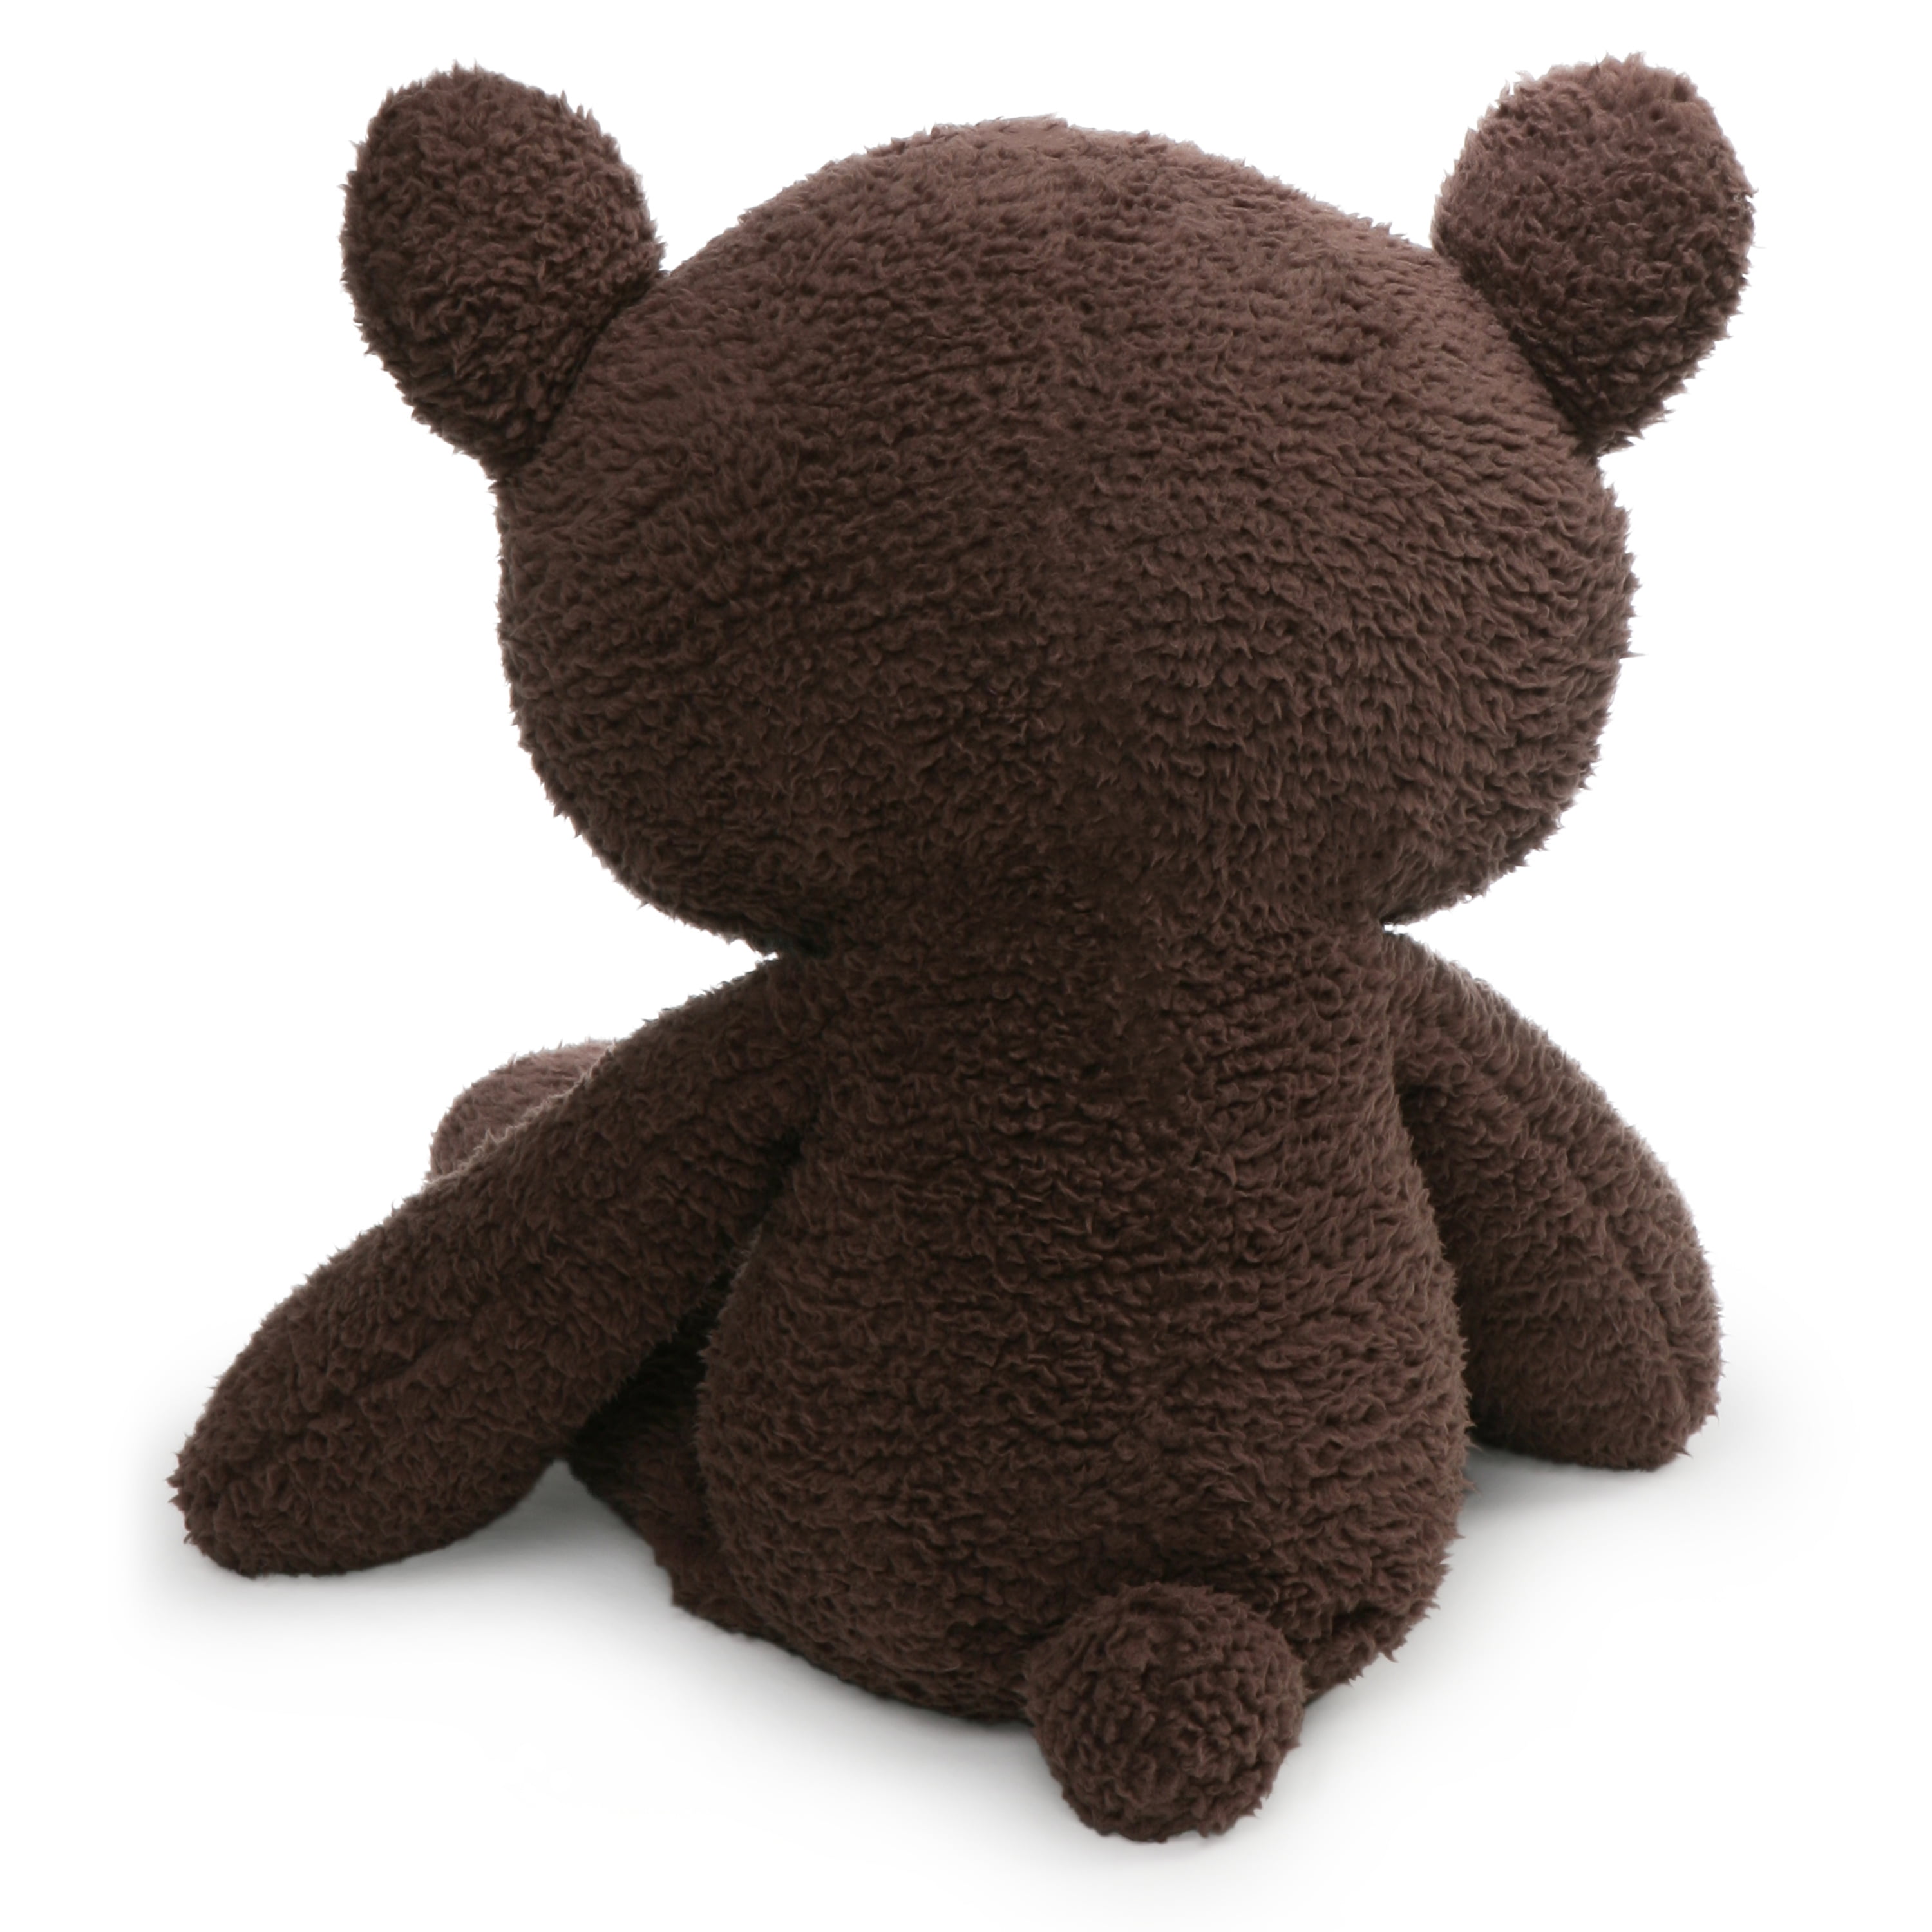 24" Chocolate Brown GUND Fuzzy Teddy Bear Stuffed Animal Plush 